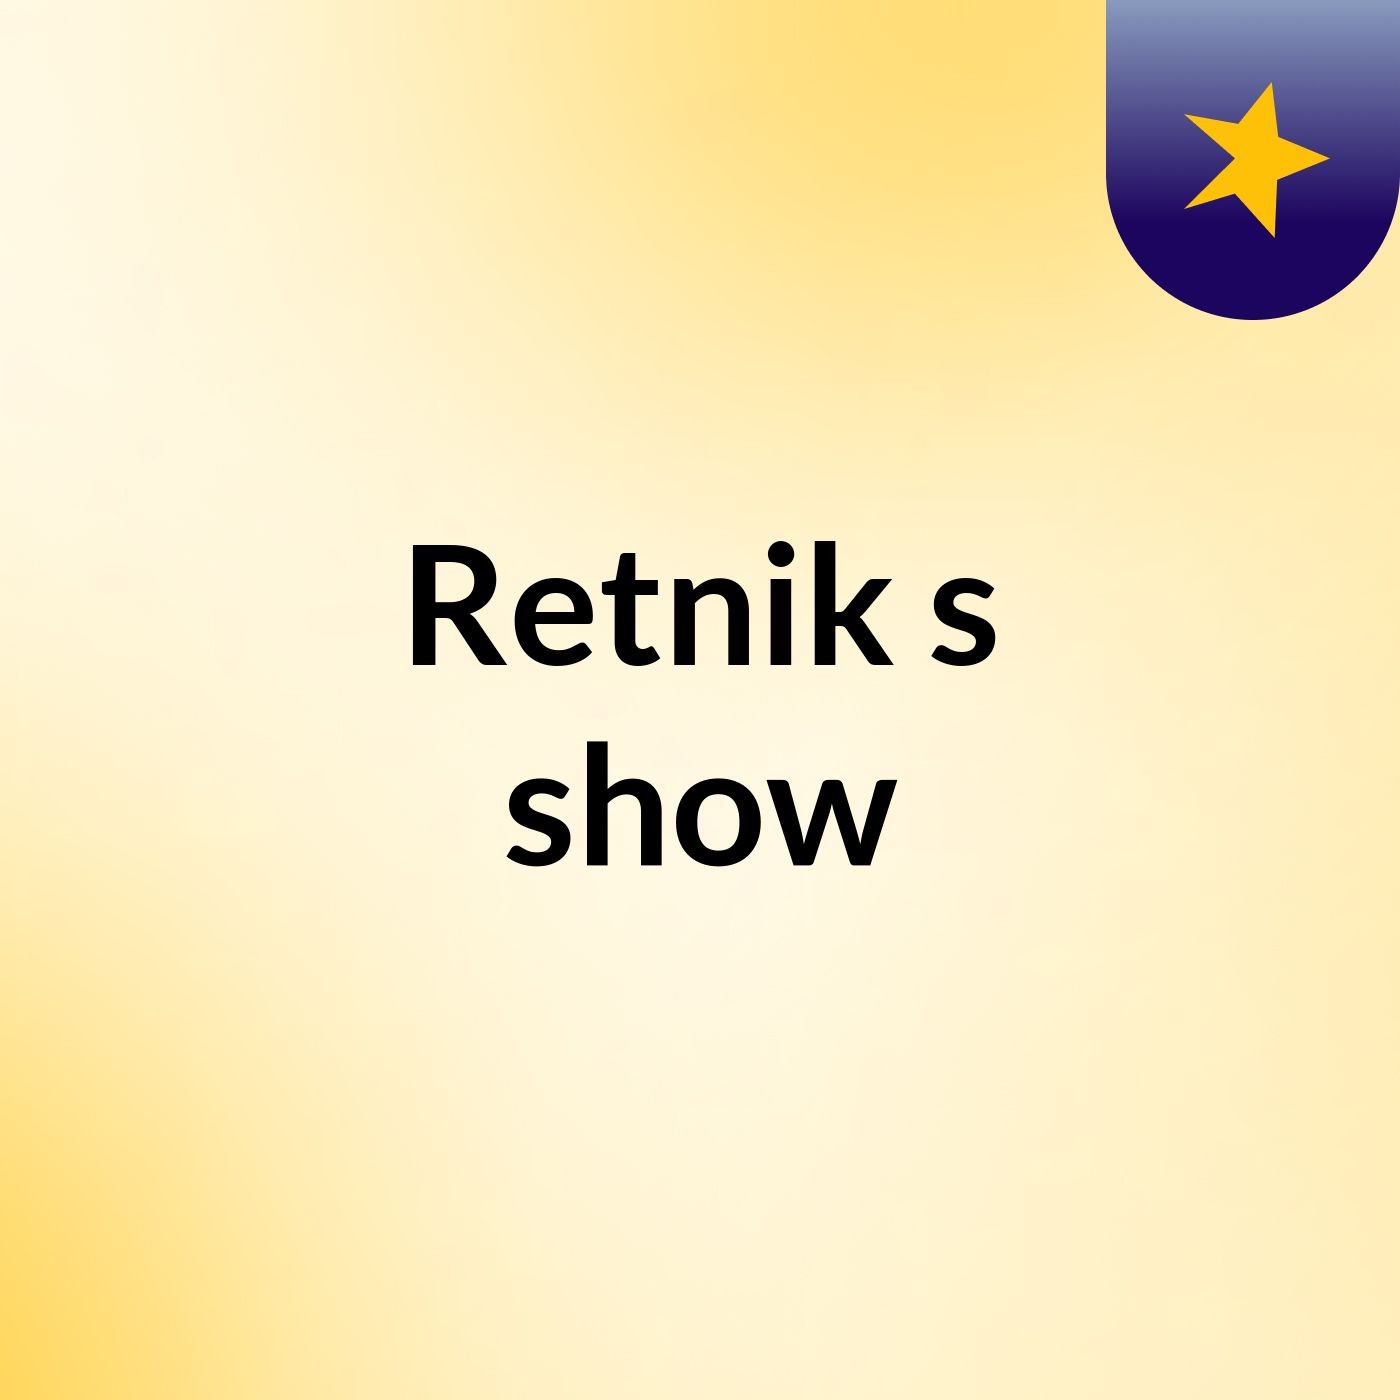 Retnik's show